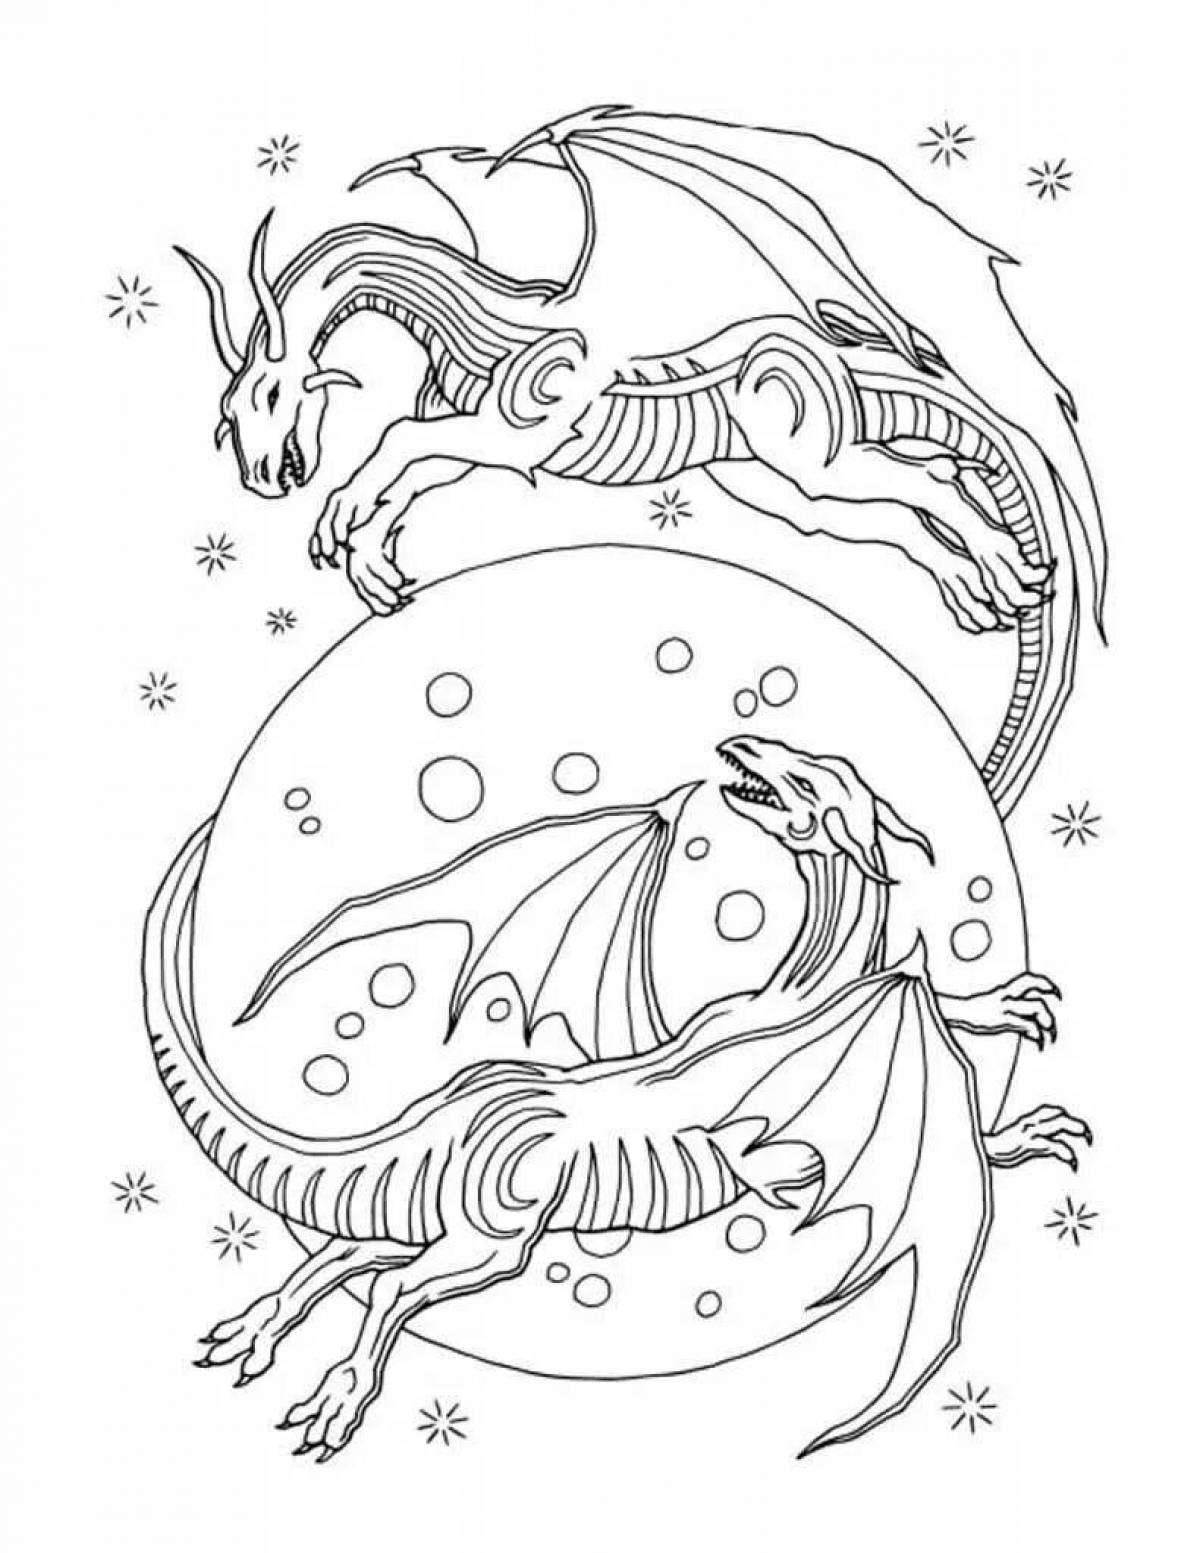 Great magic dragon coloring page